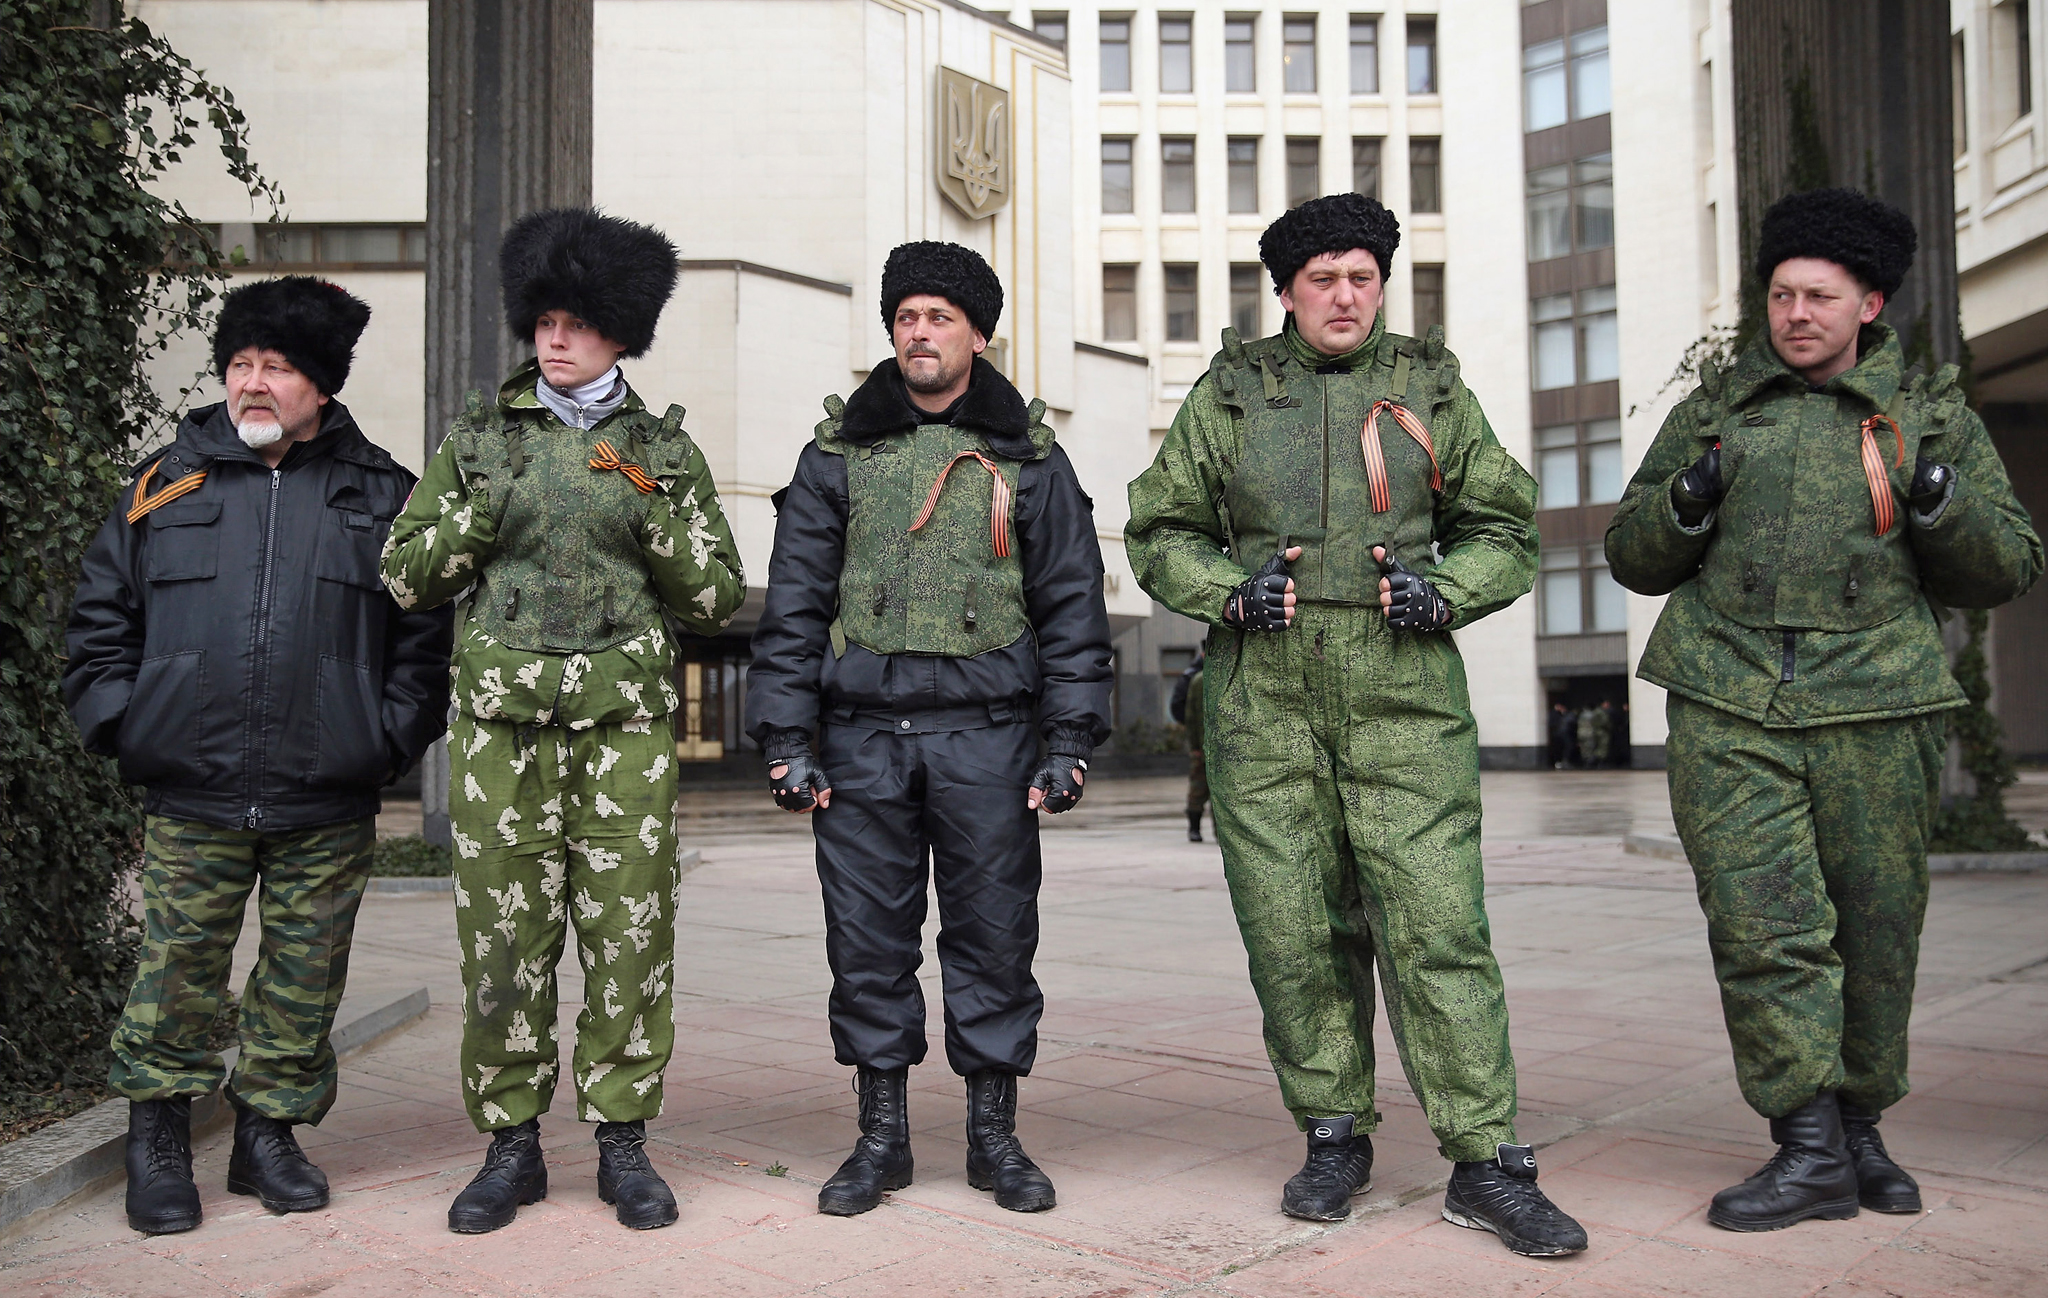 http://blogs.ft.com/photo-diary/files/2014/03/Ukraine4.jpg